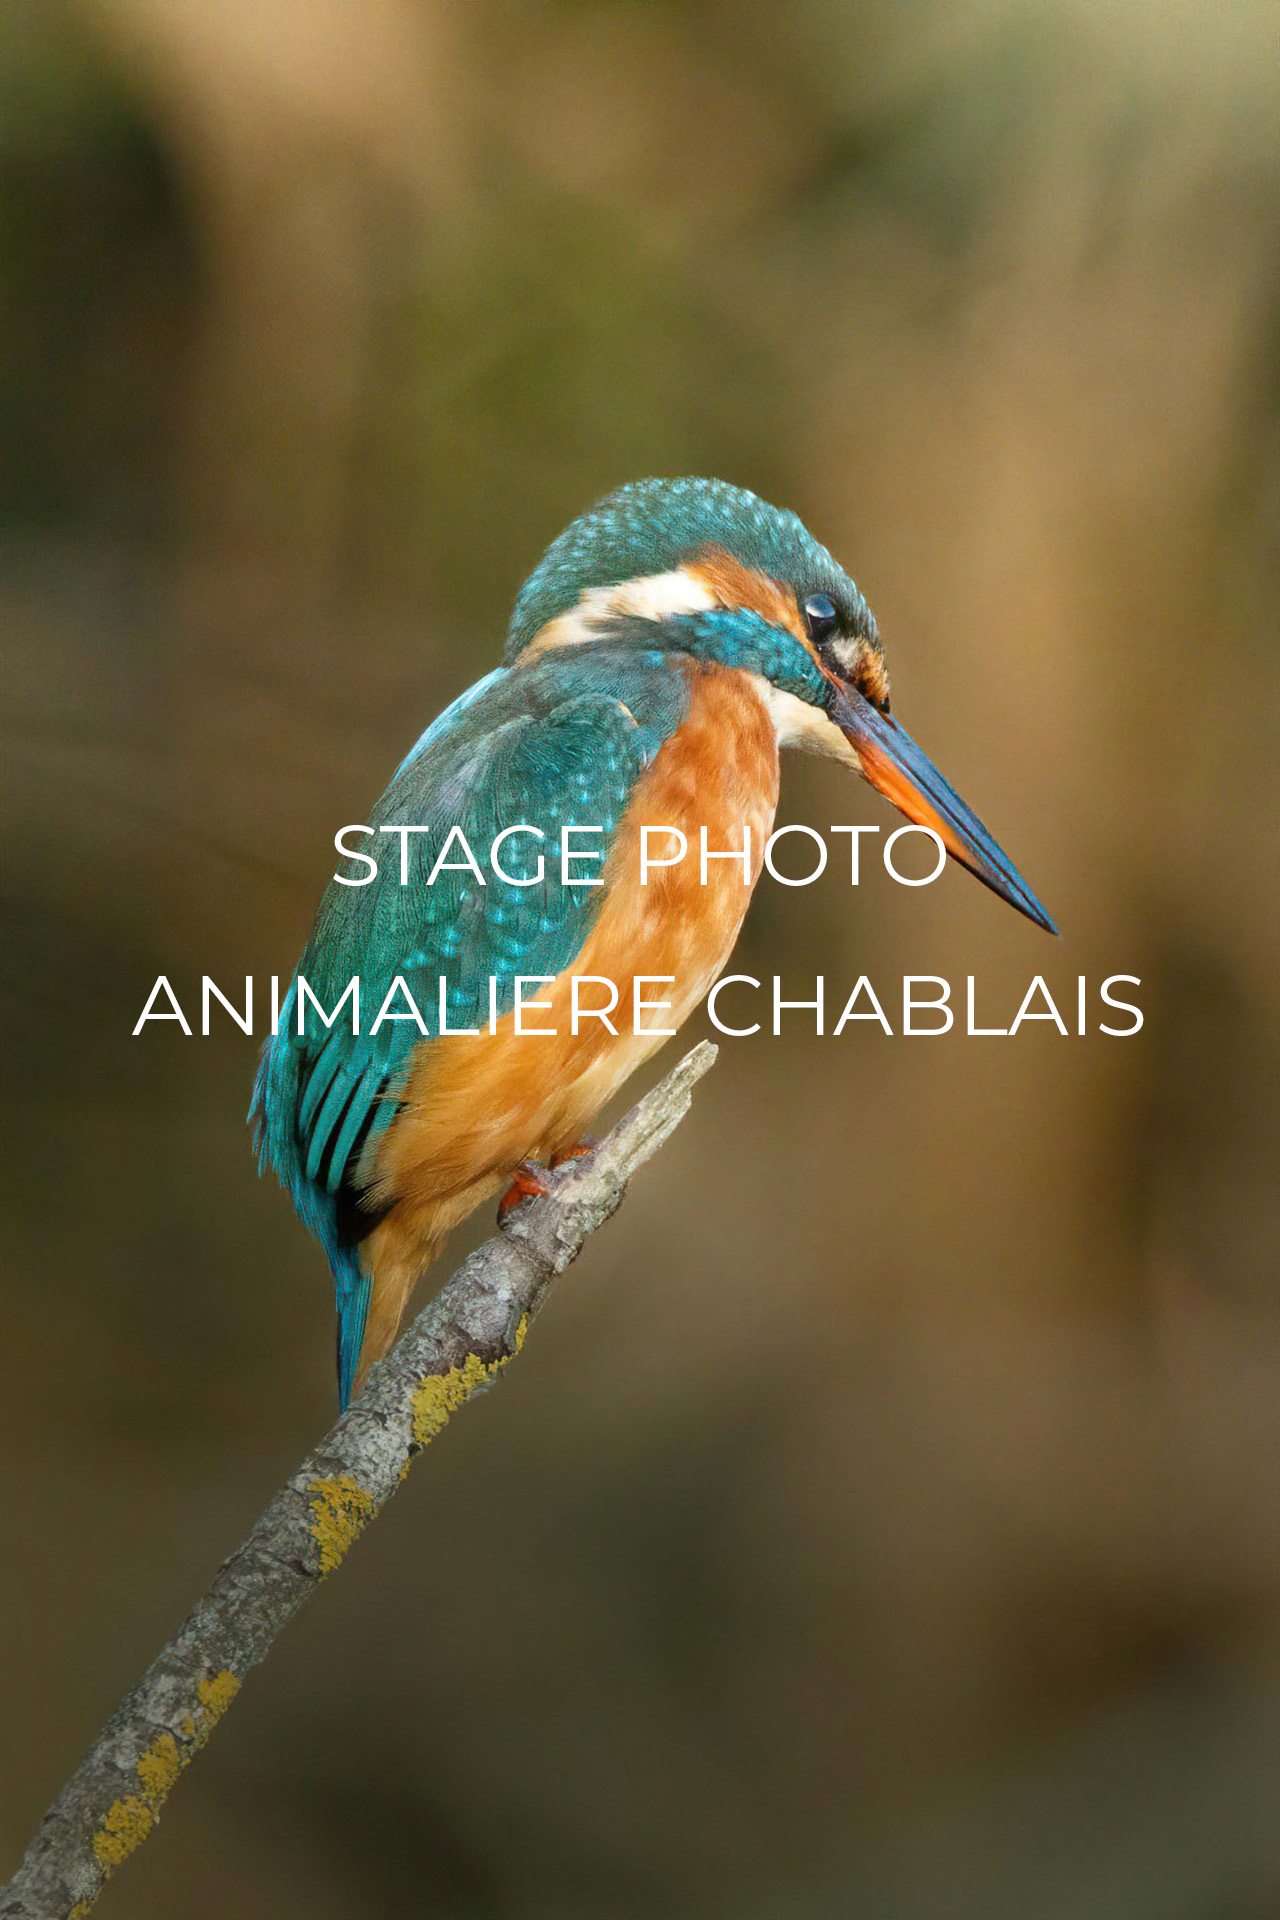 Stage photo animalière Chablais